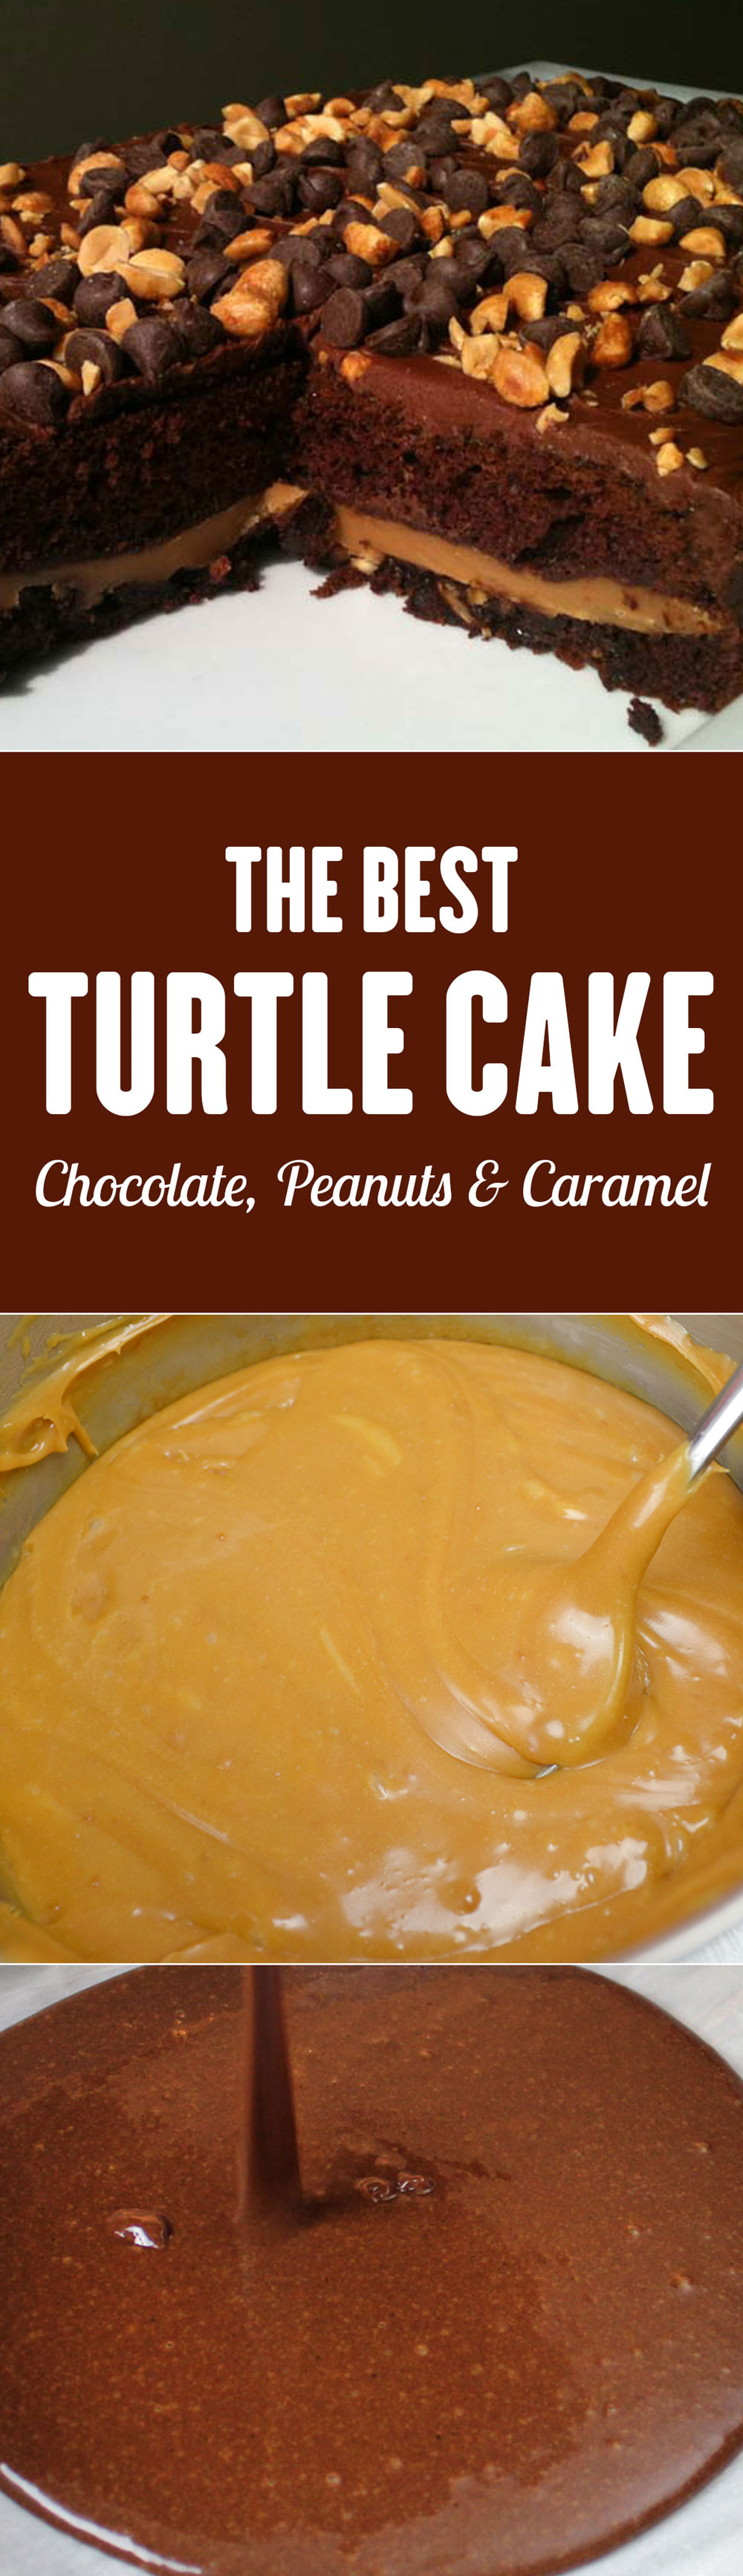 turtle-cake-recipe-peanuts-chocolate-caramel-02